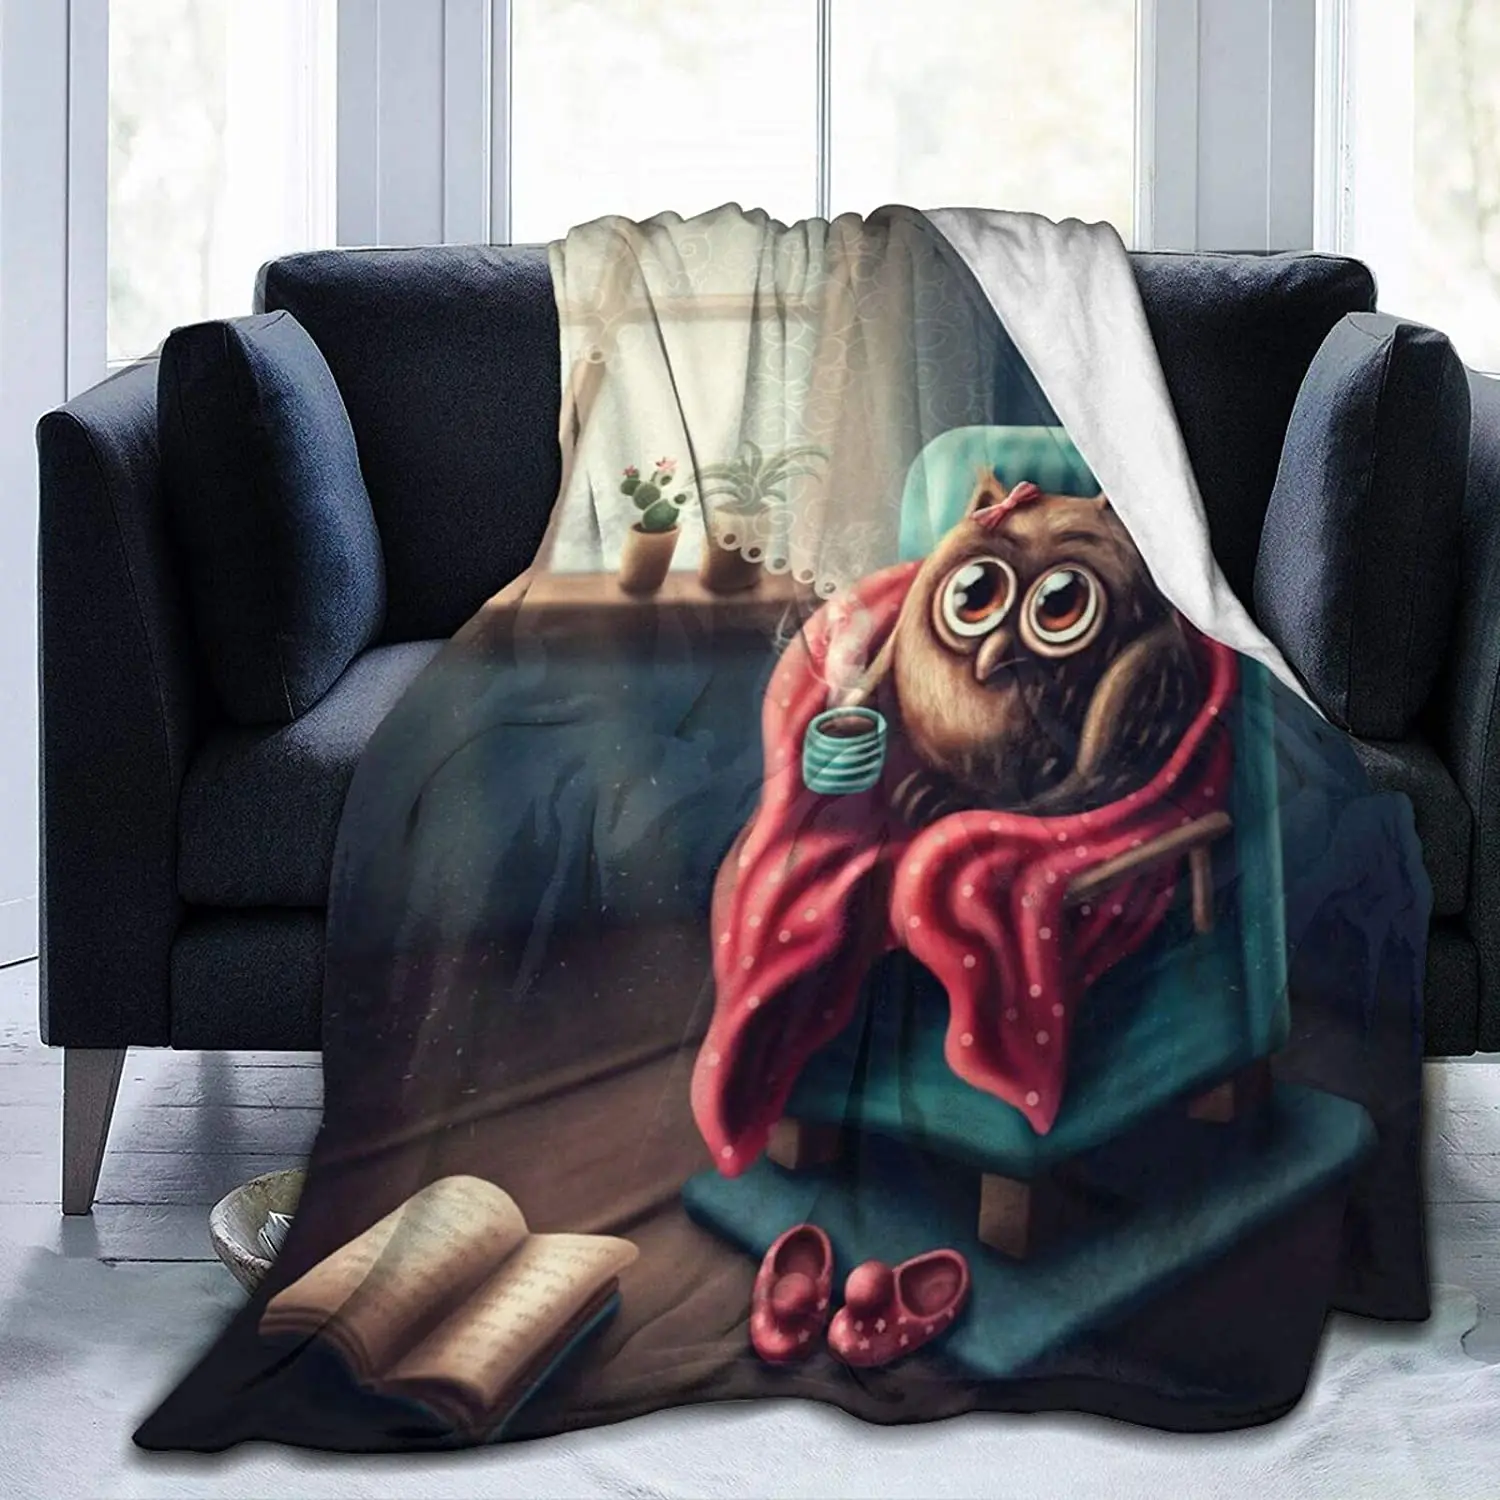 

Cute Owl Drinking Coffee Soft Throw Blanket All Season Microplush Warm Blankets Lightweight Tufted Fuzzy Flannel Fleece Blanket